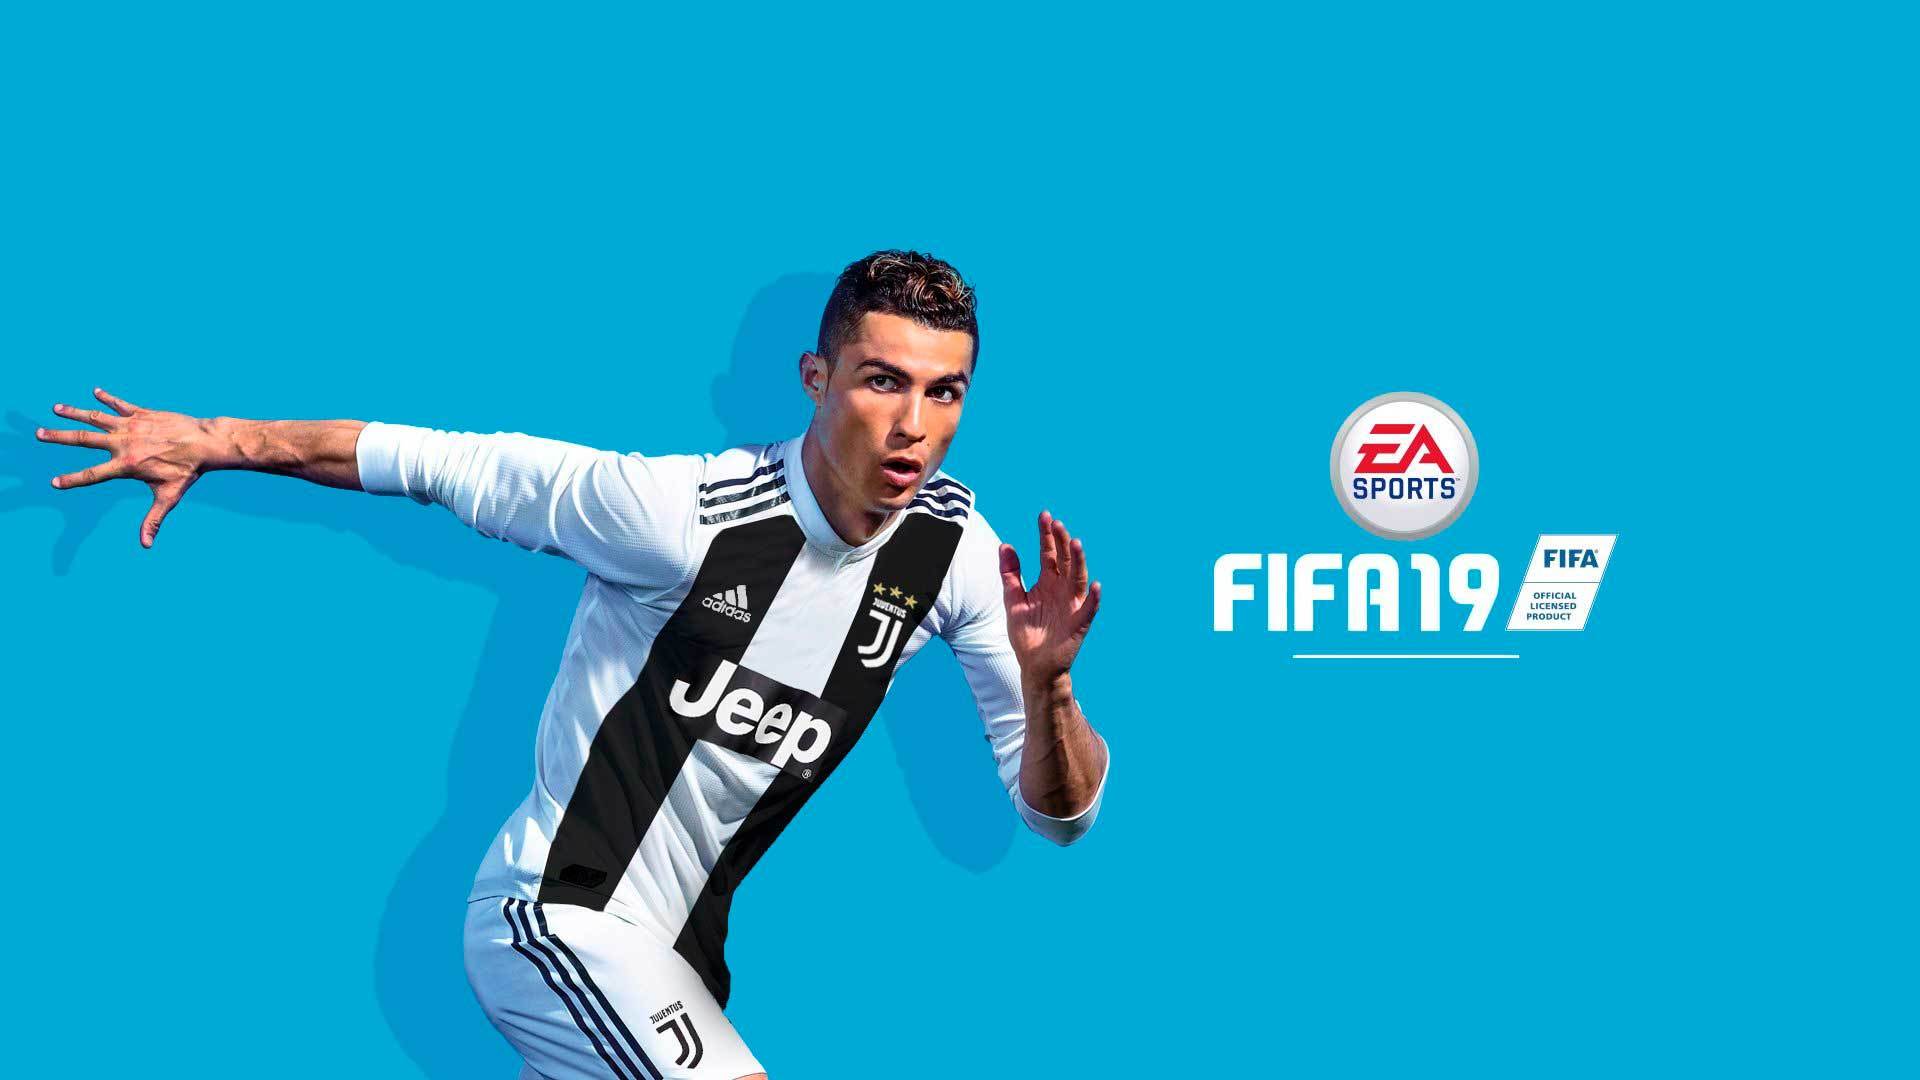 Cristiano Ronaldo FIFA 19 Game Wallpaper, HD Games 4K Wallpaper